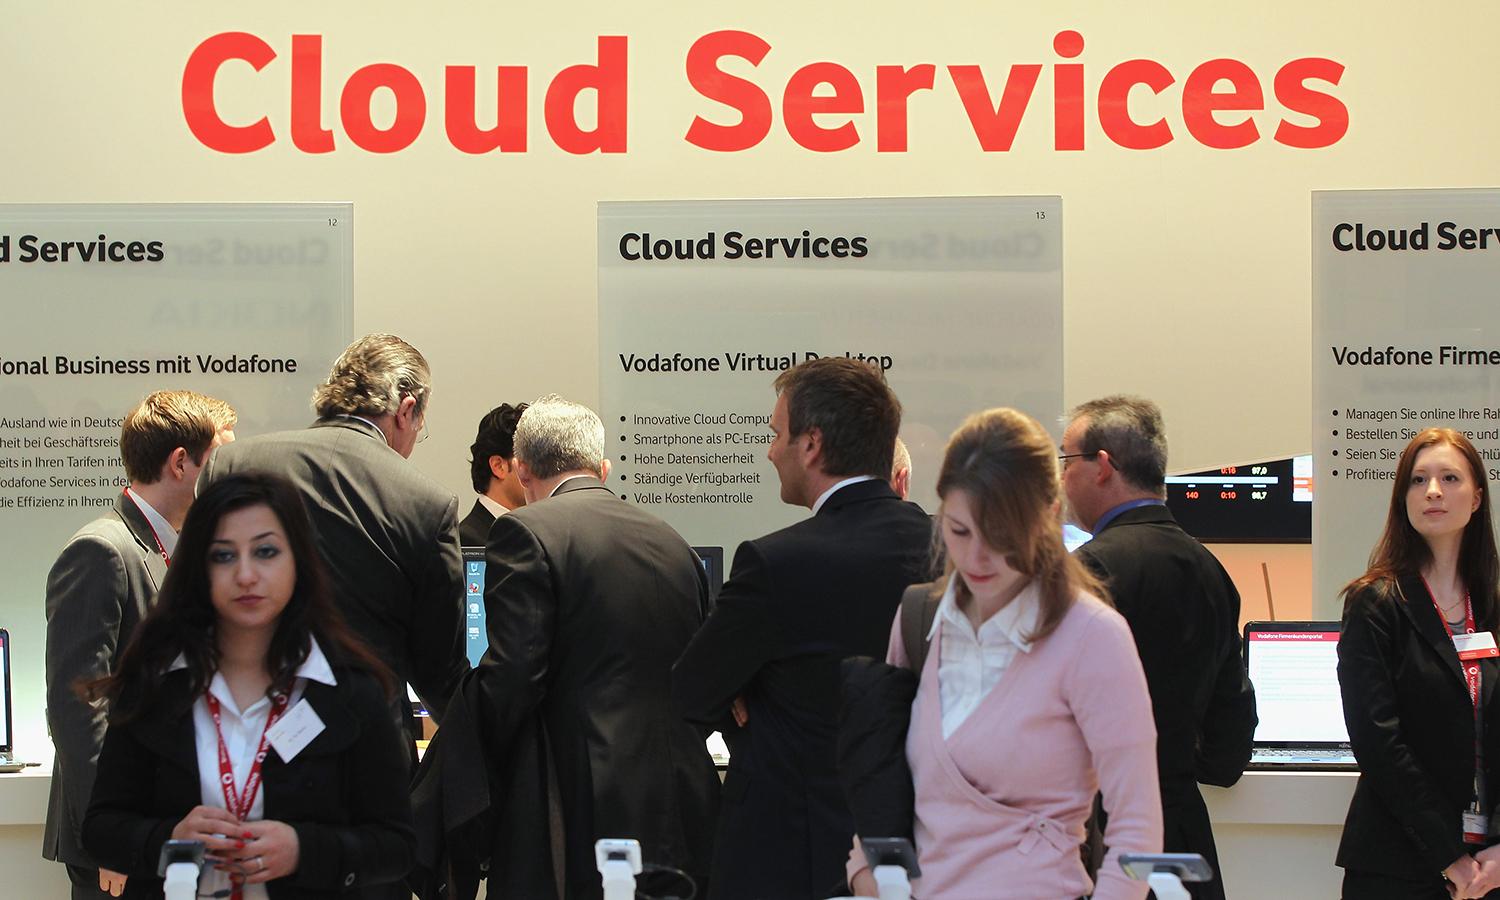 Cloud services presentation at a trade fair